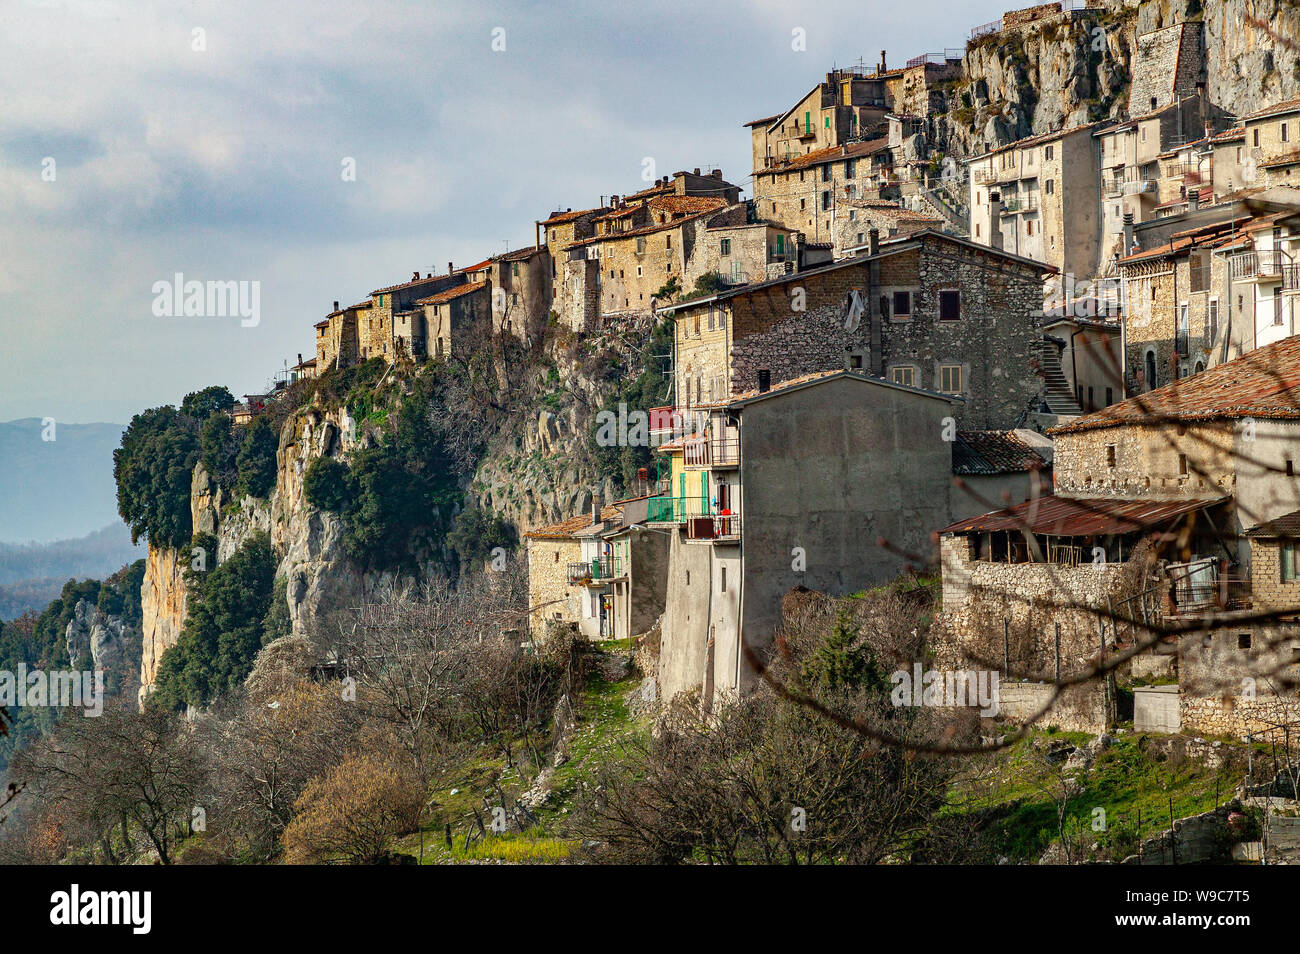 mountain village on the edge of cliff. Pietrasecca, Province of L'Aquila, Abruzzo, Italy, Europe Stock Photo